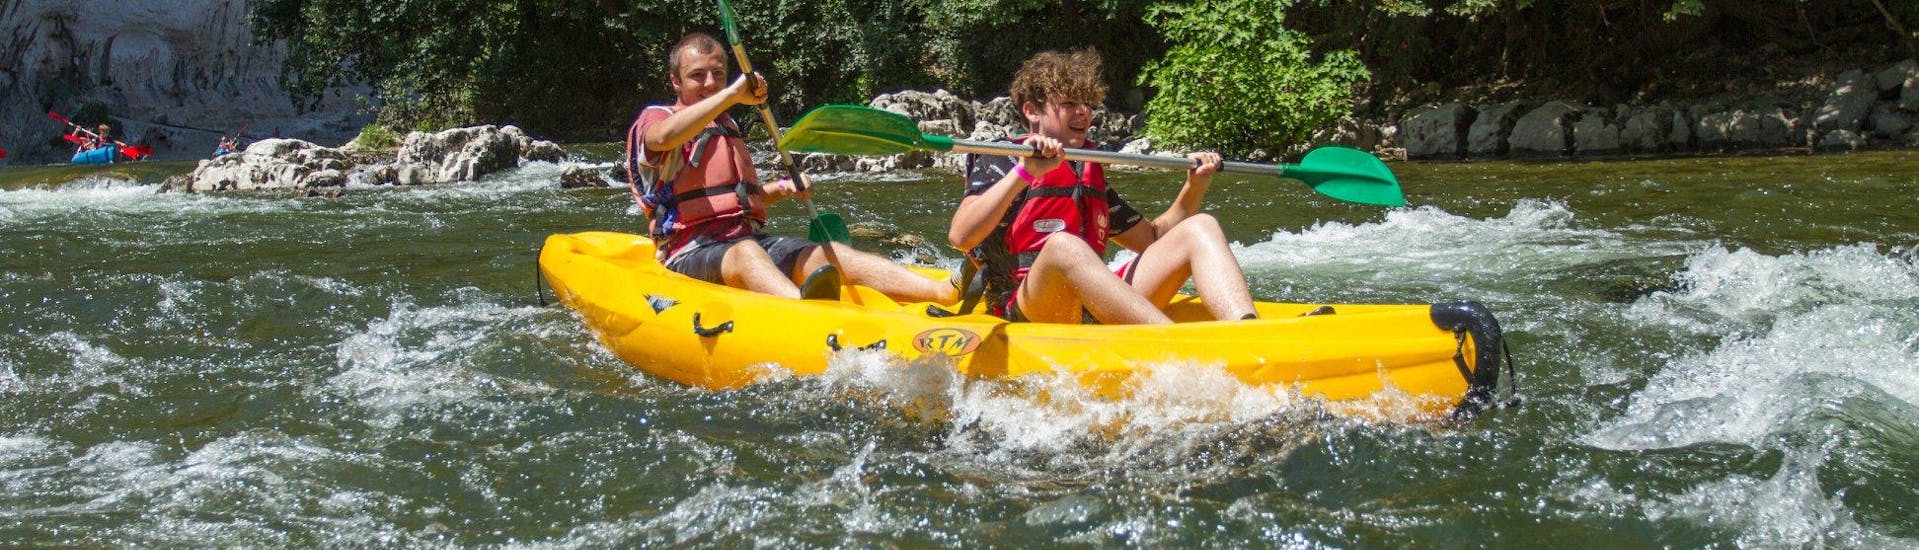 Alquiler de kayak y canoa de 36 km en Ardèche - Descenso completo.